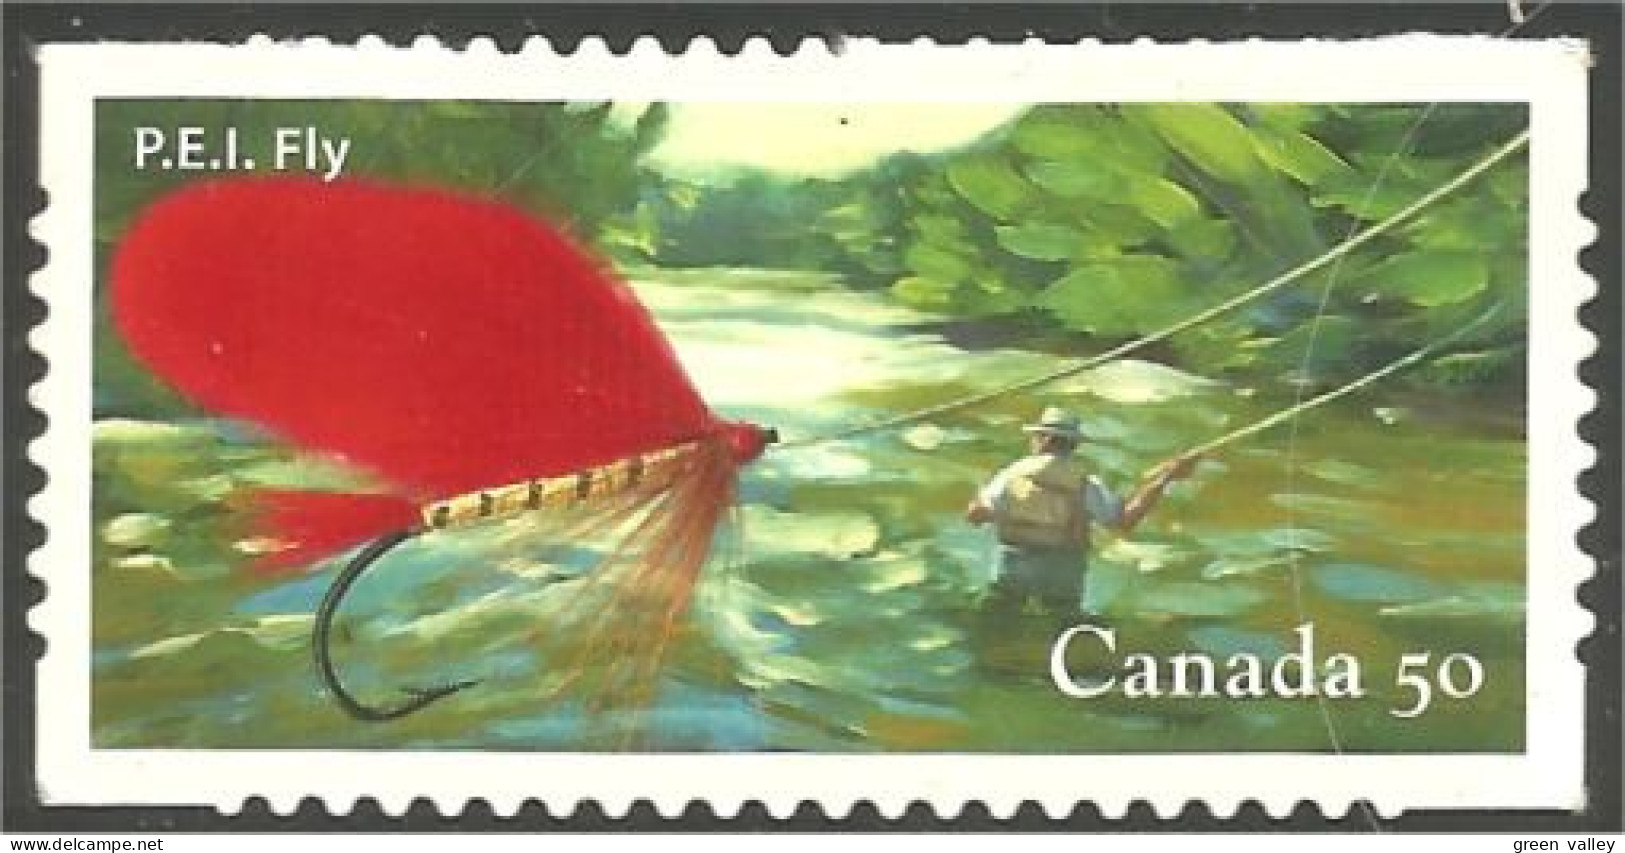 Canada Mouche Fishing Fly Pour Saumon / For Salmon MNH ** Neuf SC (C20-88da) - Nuovi